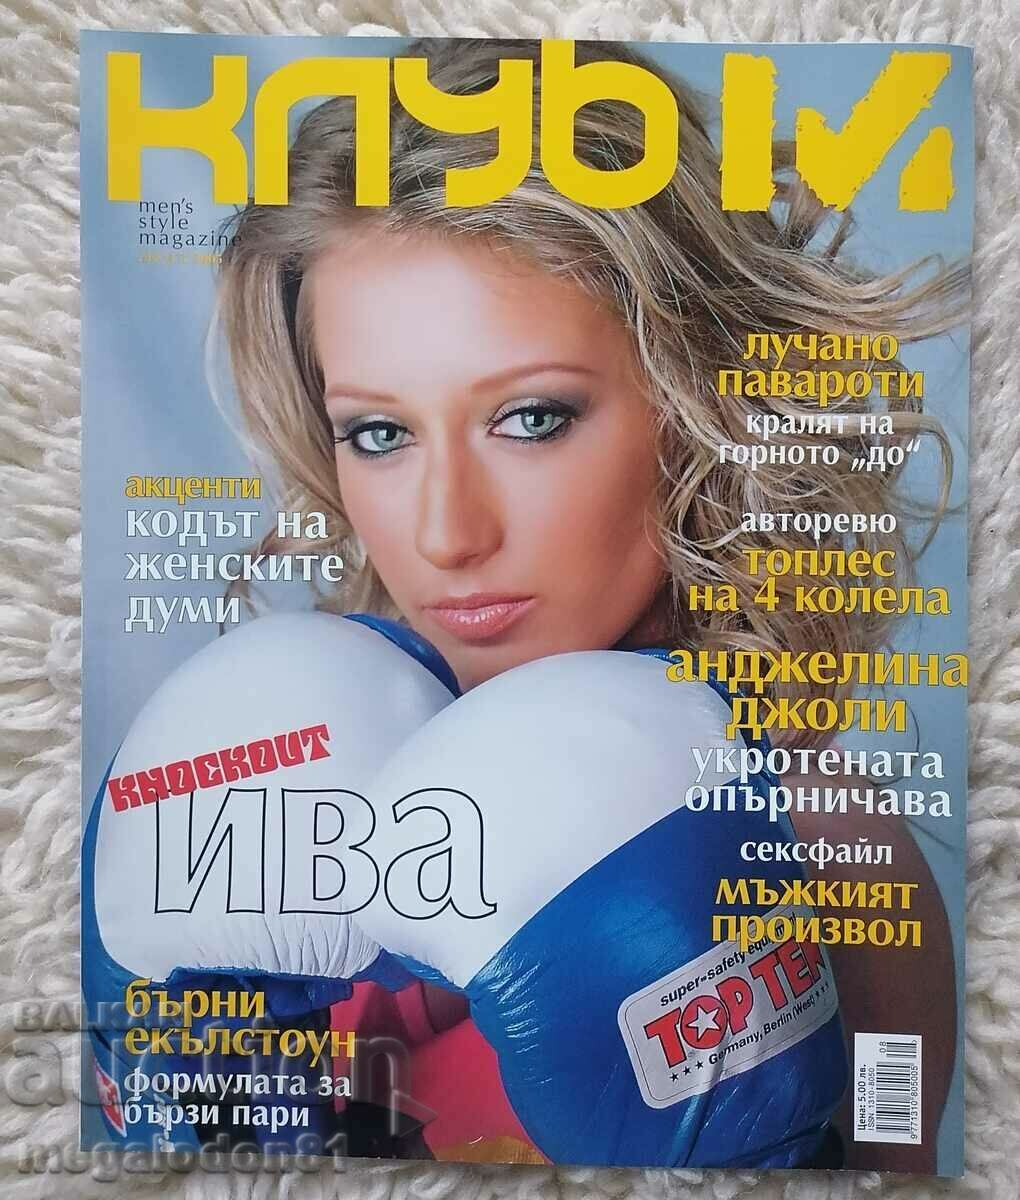 Club M magazine, August 2005.